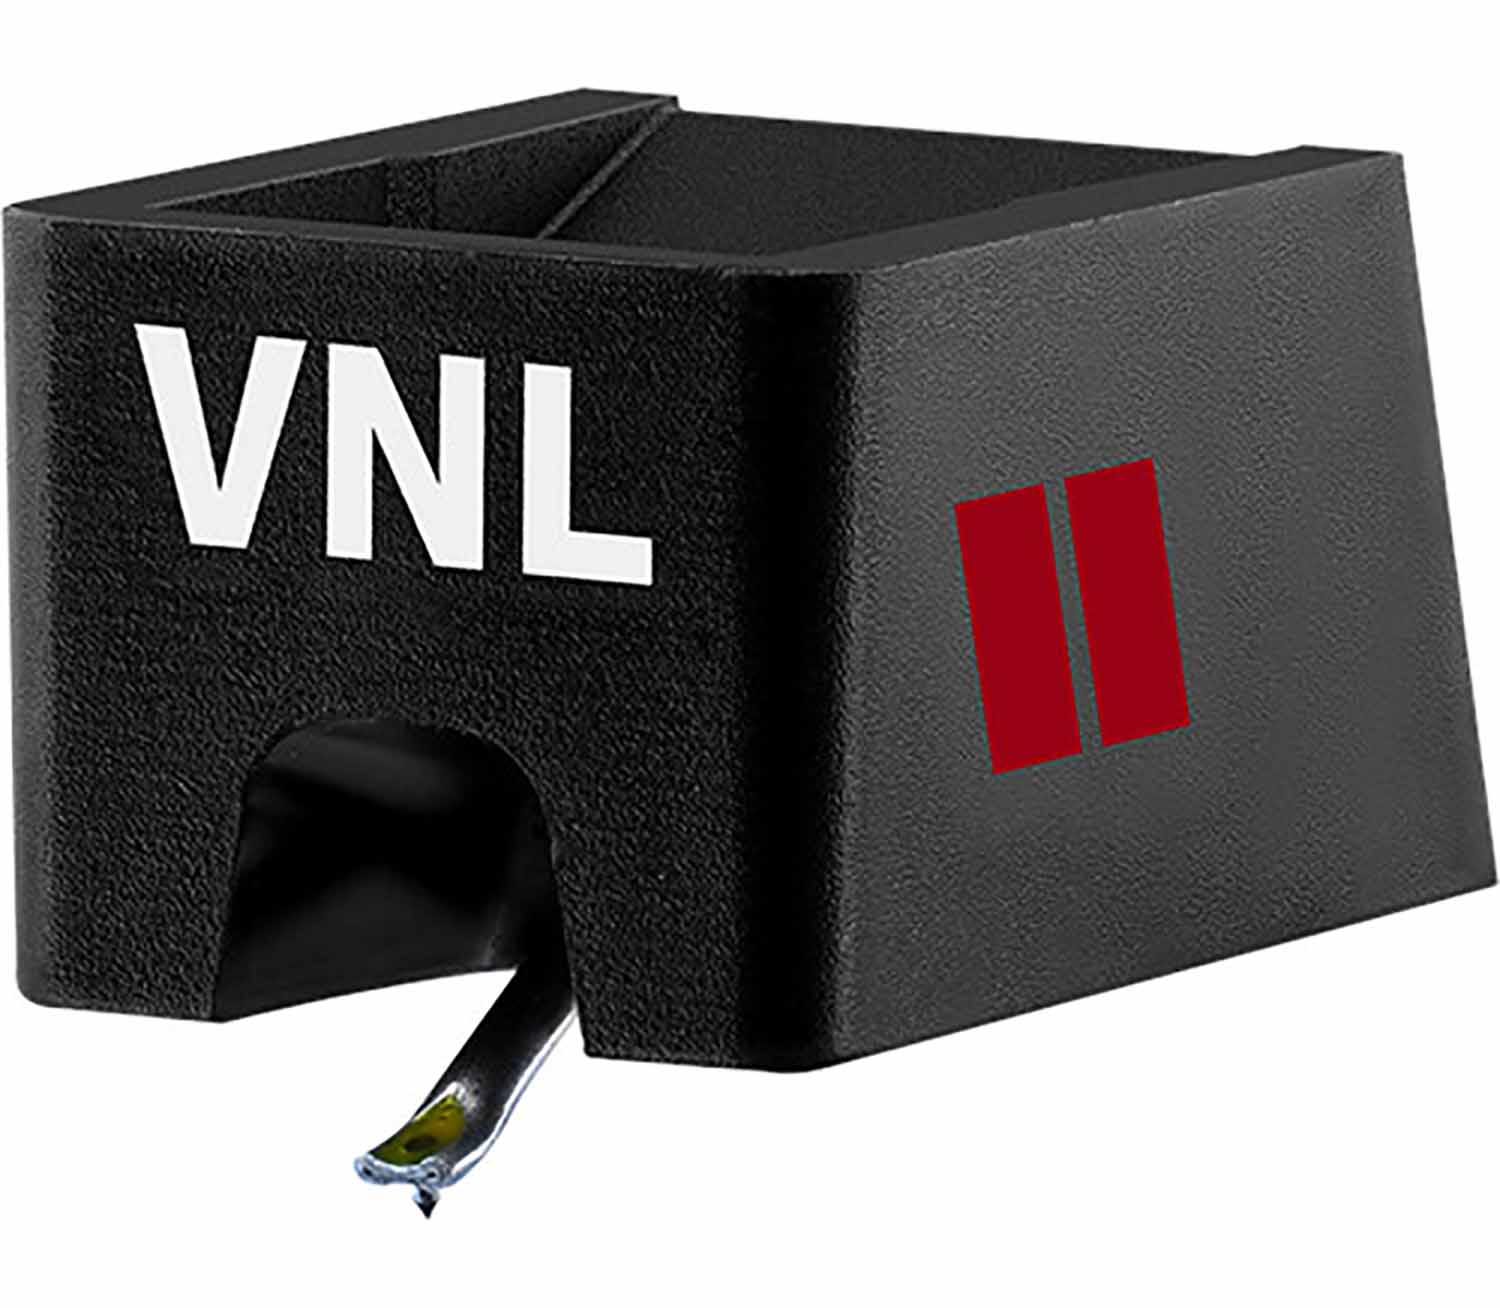 Ortofon VNL II Replacement Stylus for Ortofon VNL Cartridge - Rigid - Hollywood DJ